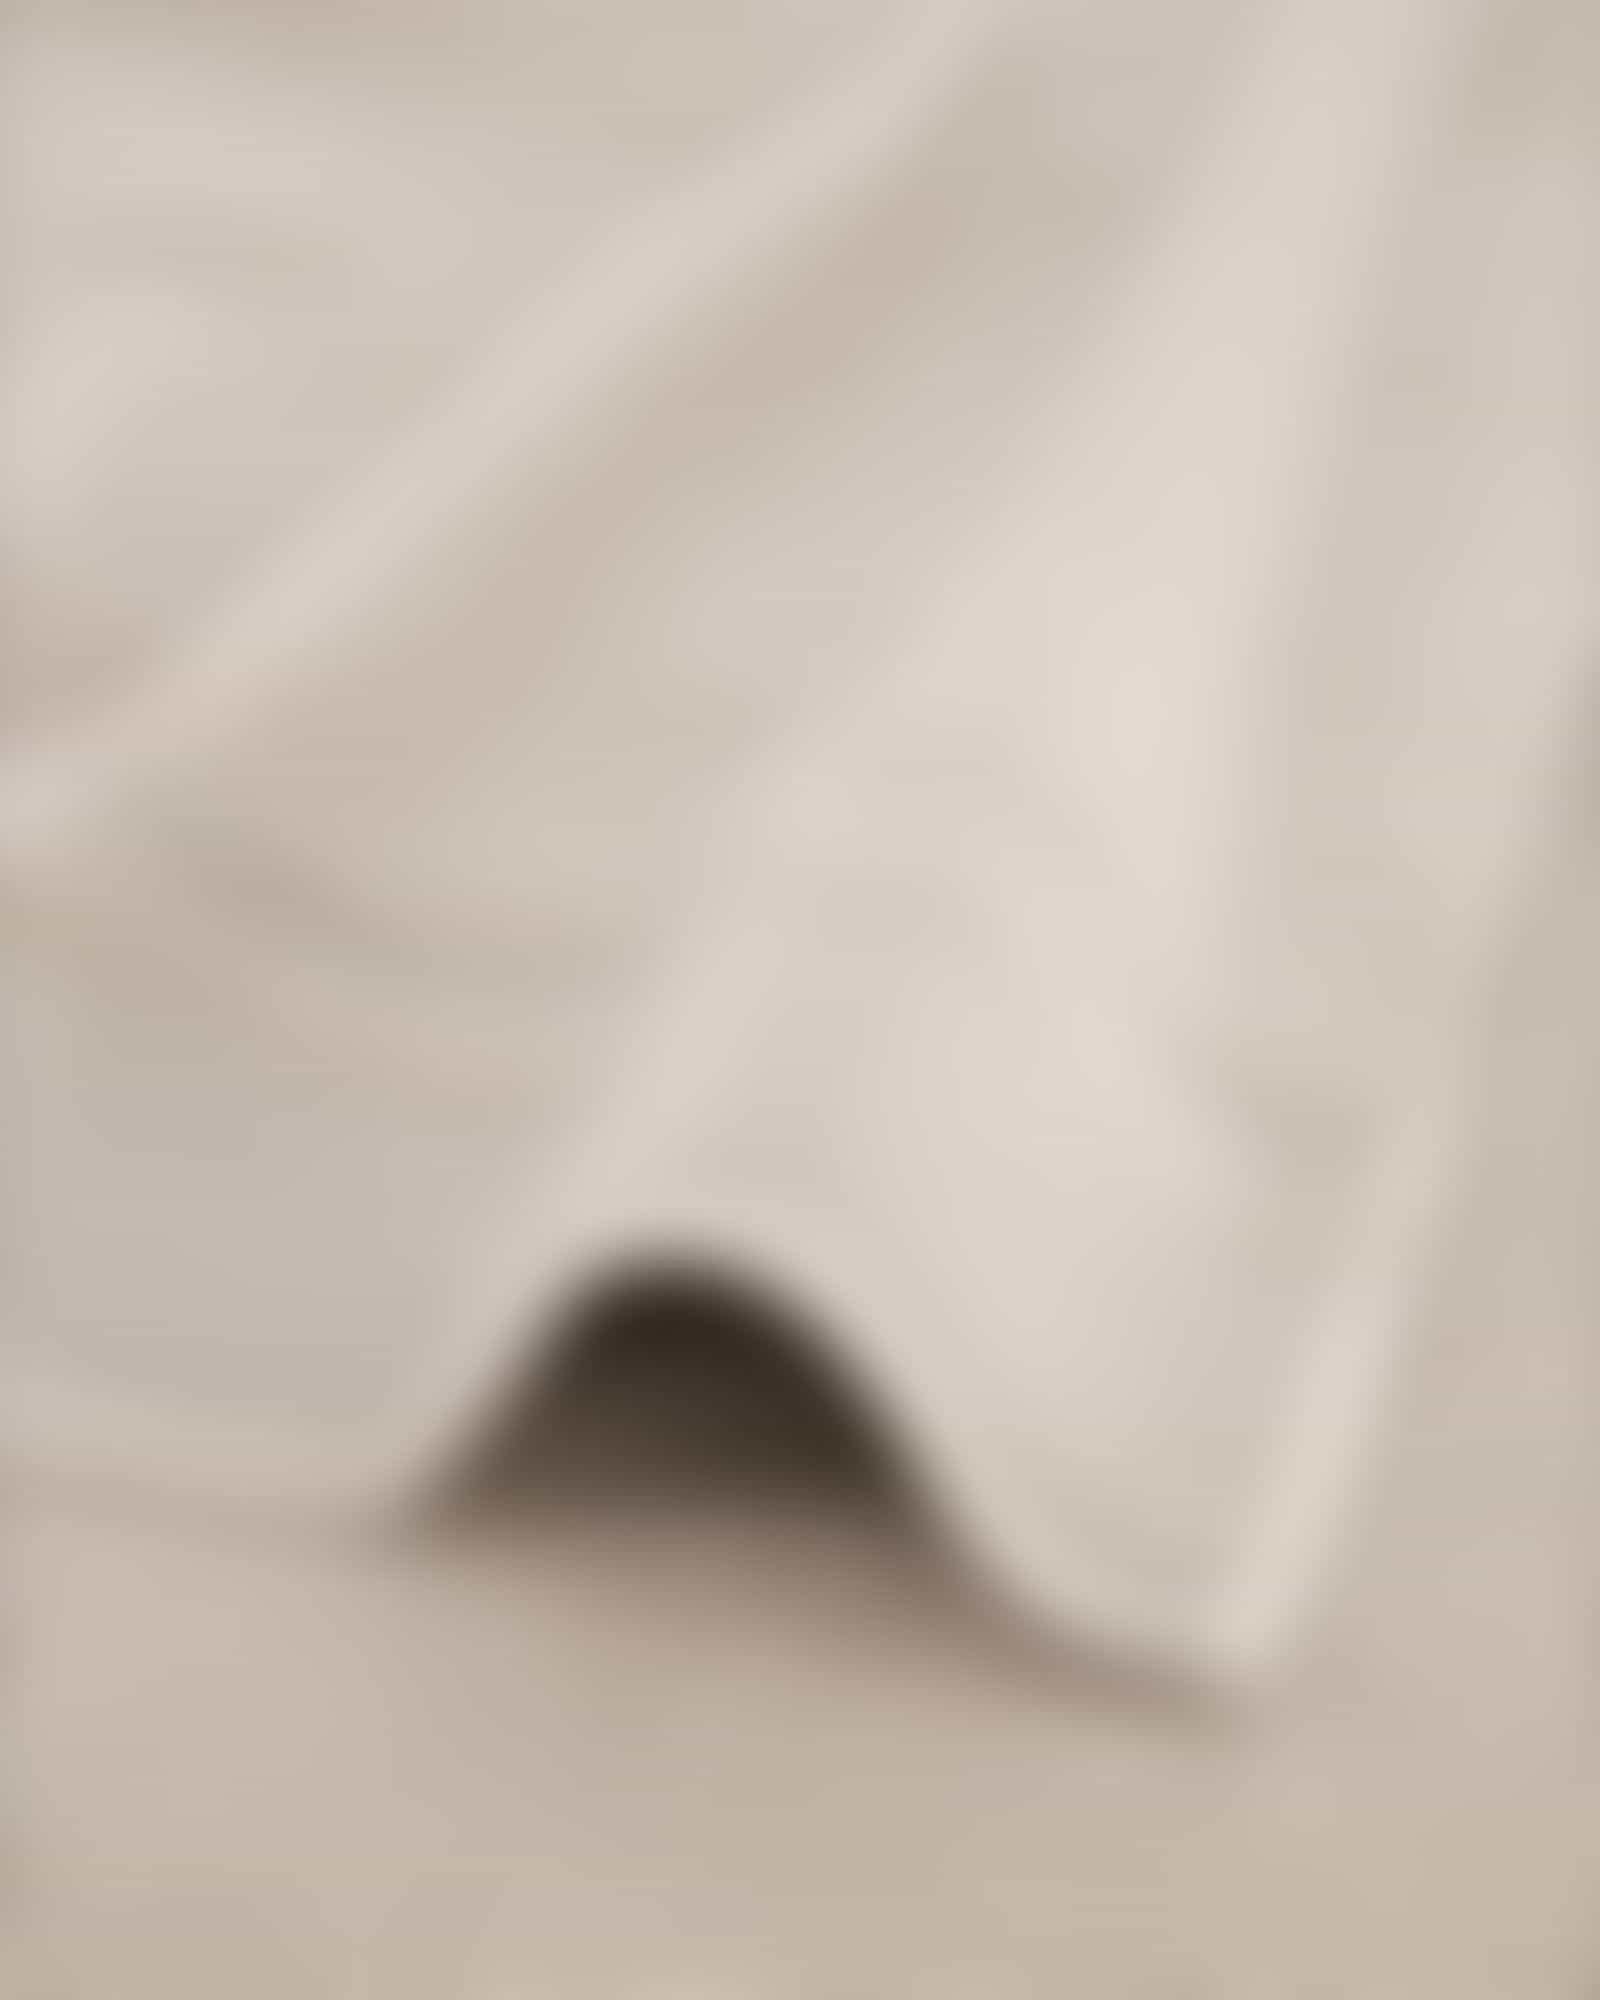 Möve Handtücher Wellbeing Perlstruktur - Farbe: cashmere - 713 - Duschtuch 67x140 cm